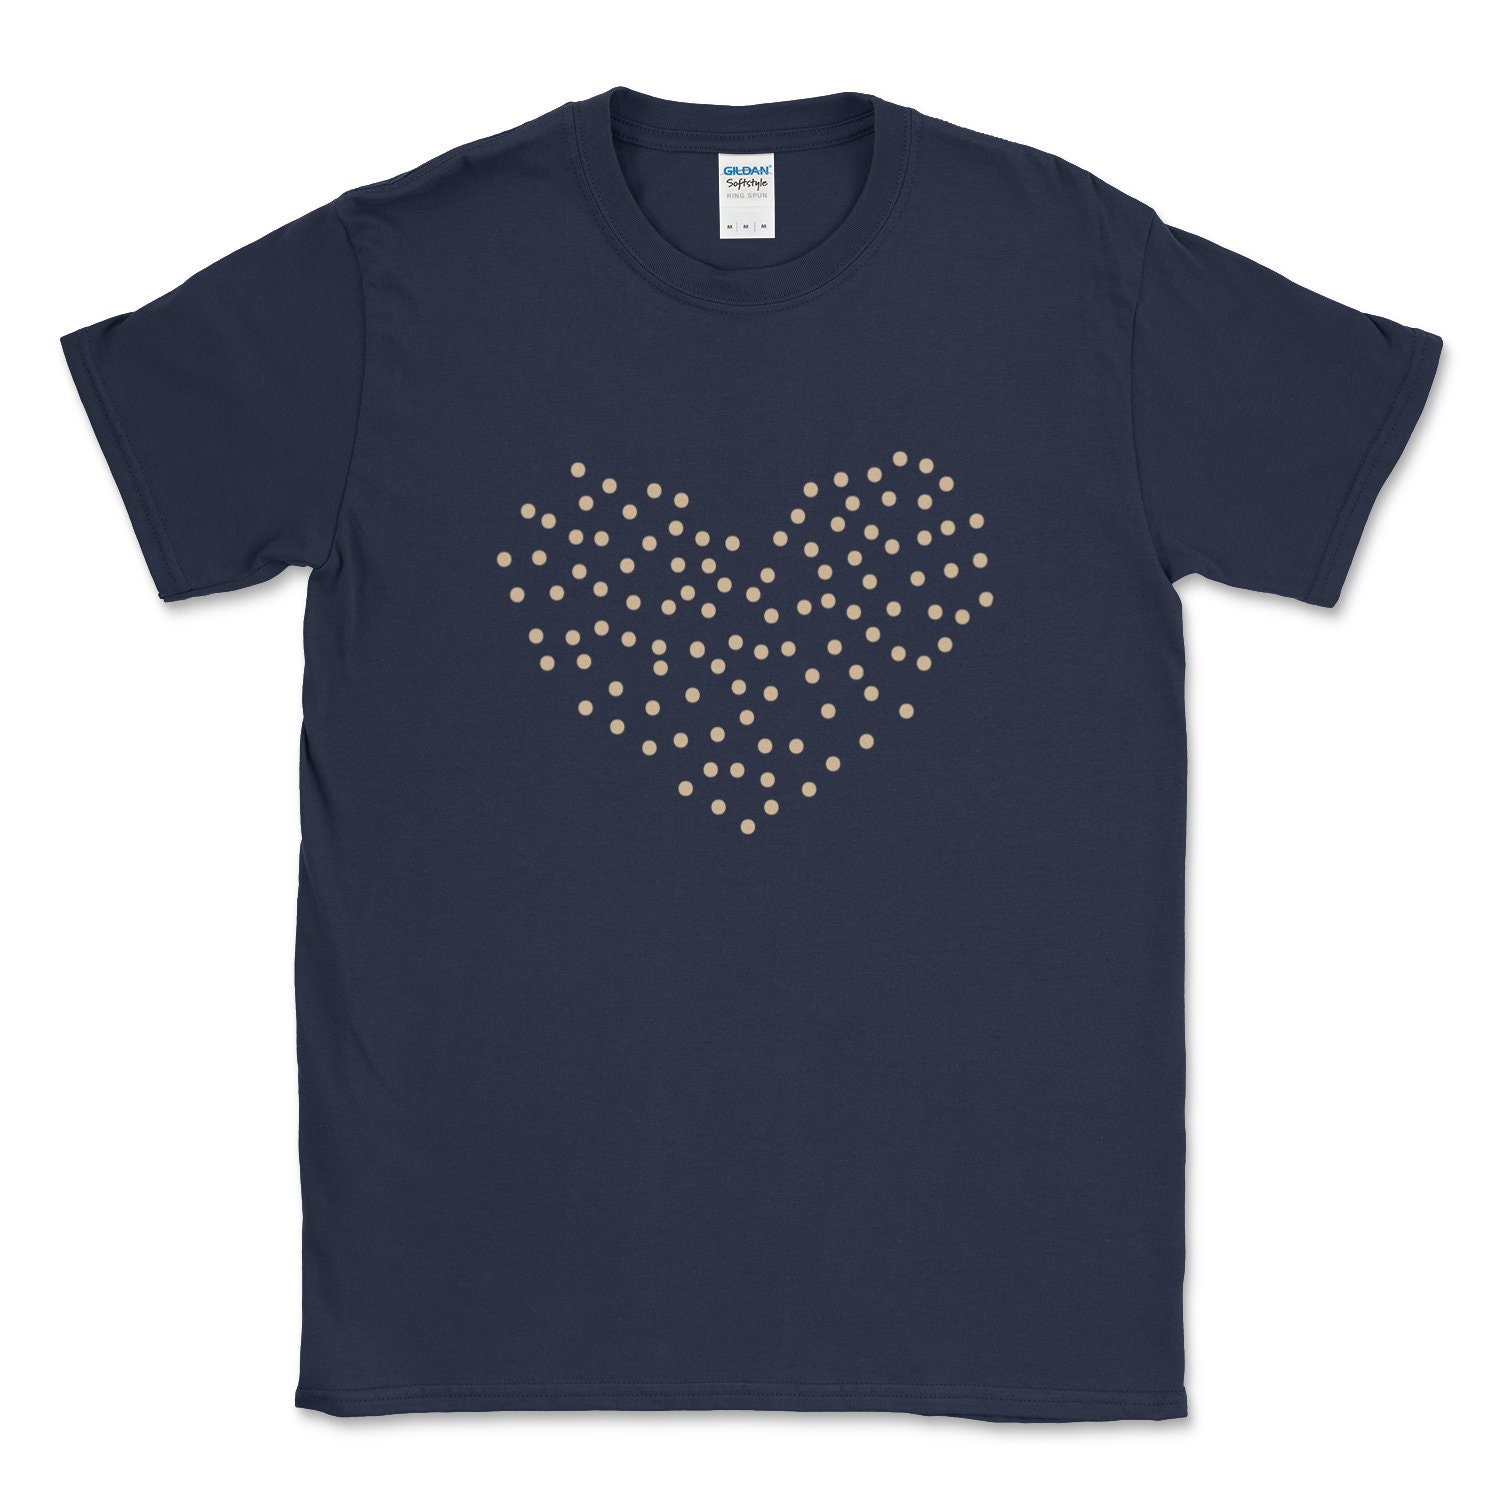 Discover Women's Heart Shirt / Boho Heart T-Shirt / Love Hearts T-Shirt